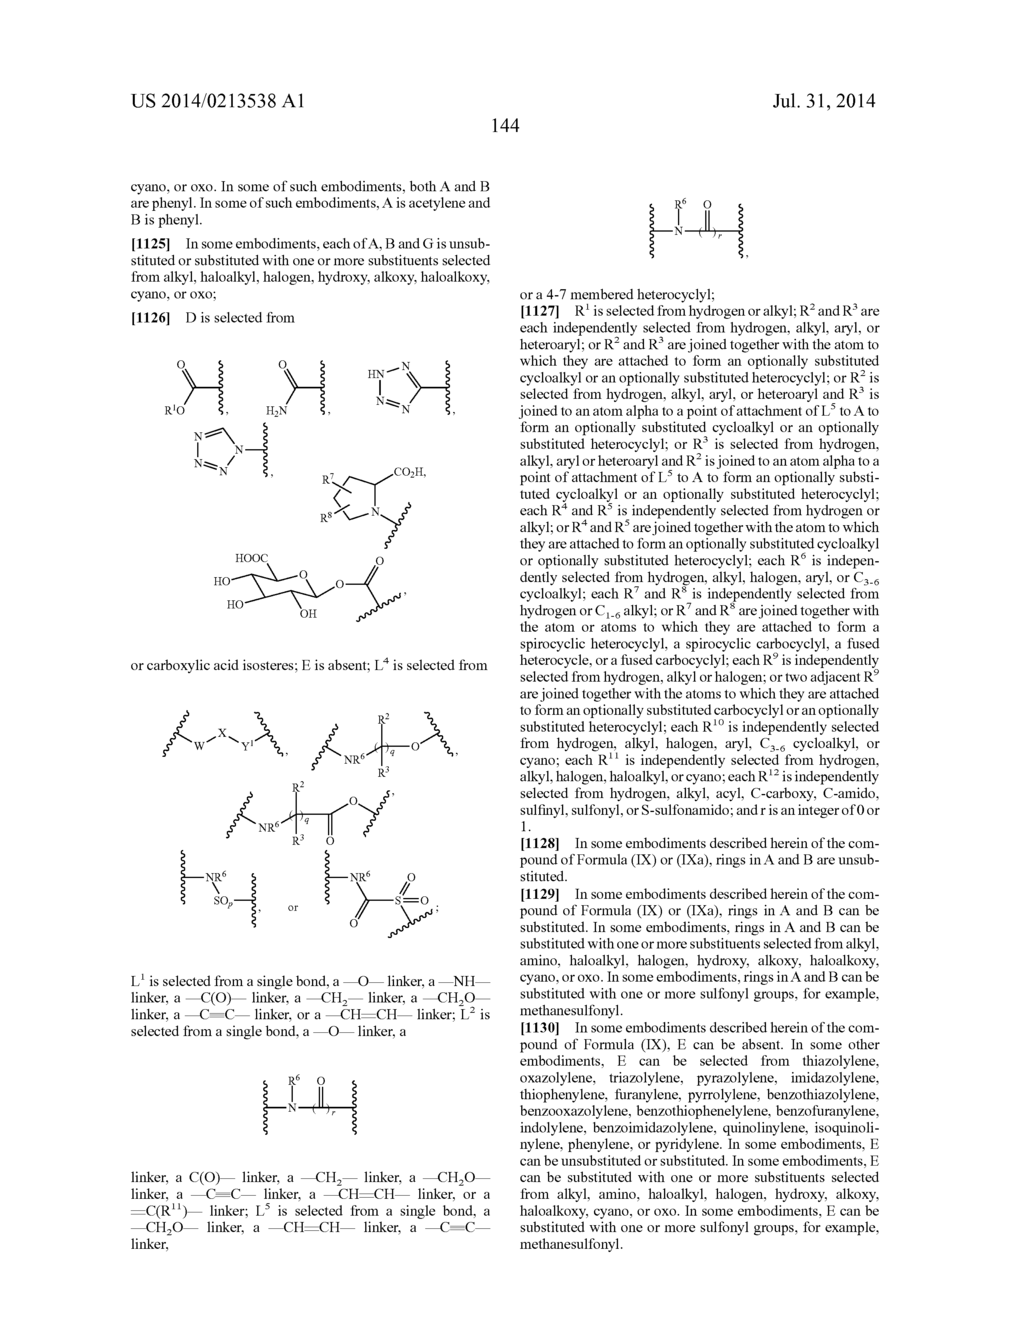 LYSOPHOSPHATIDIC ACID RECEPTOR ANTAGONISTS - diagram, schematic, and image 145